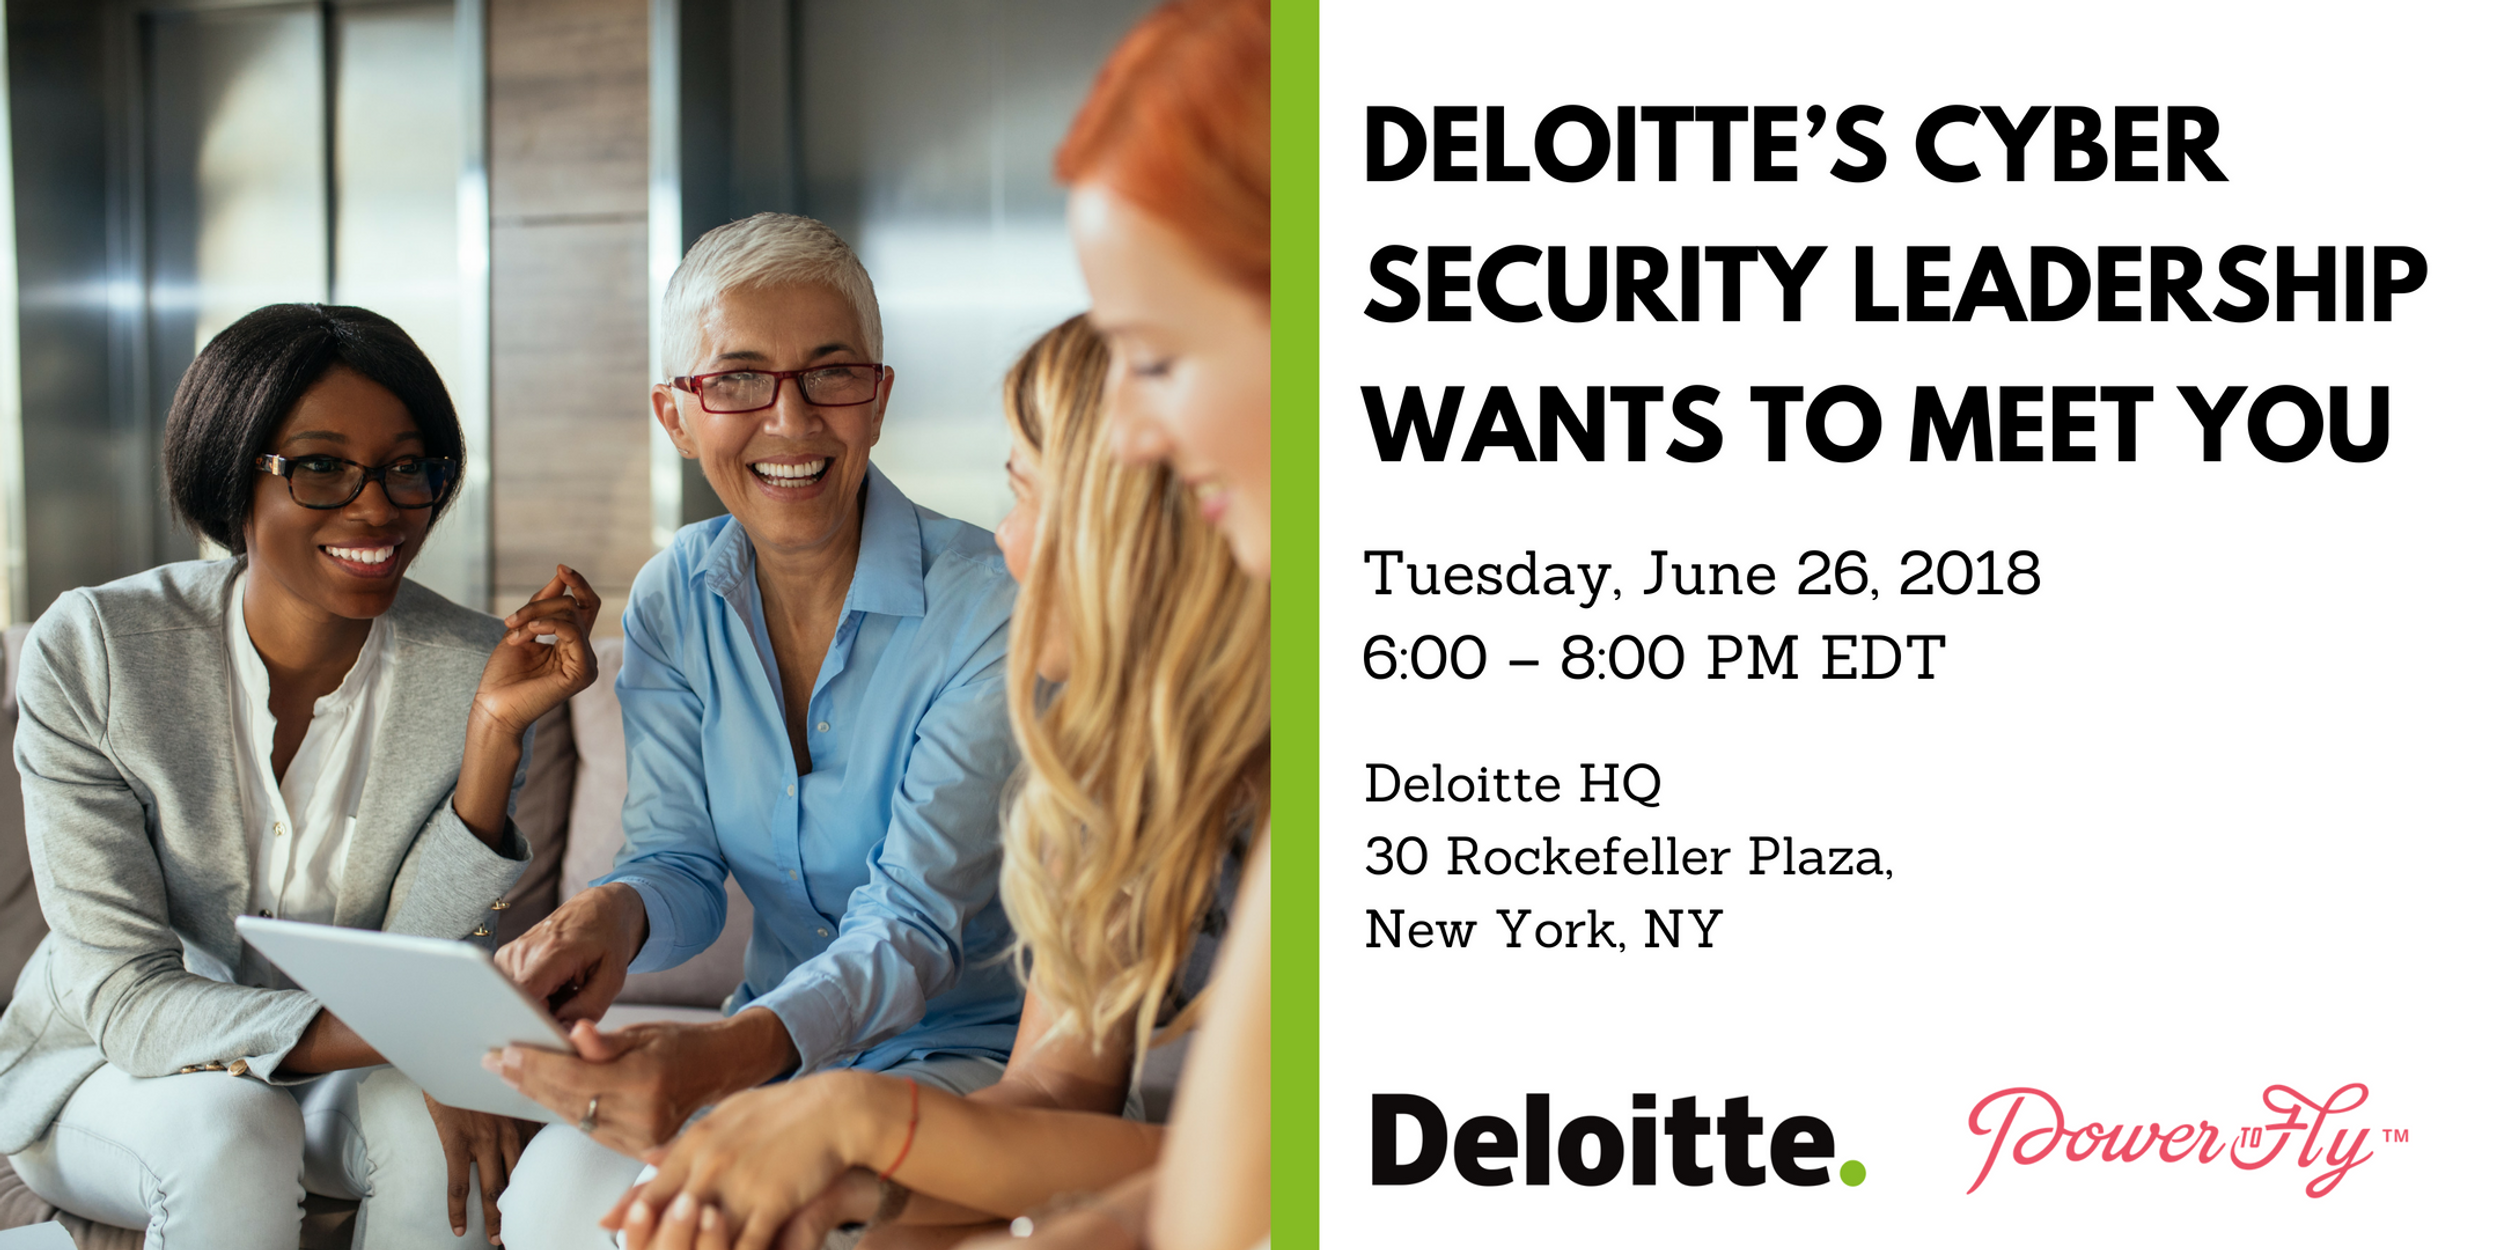 Deloitte’s Cyber Security Leadership Wants to Meet You